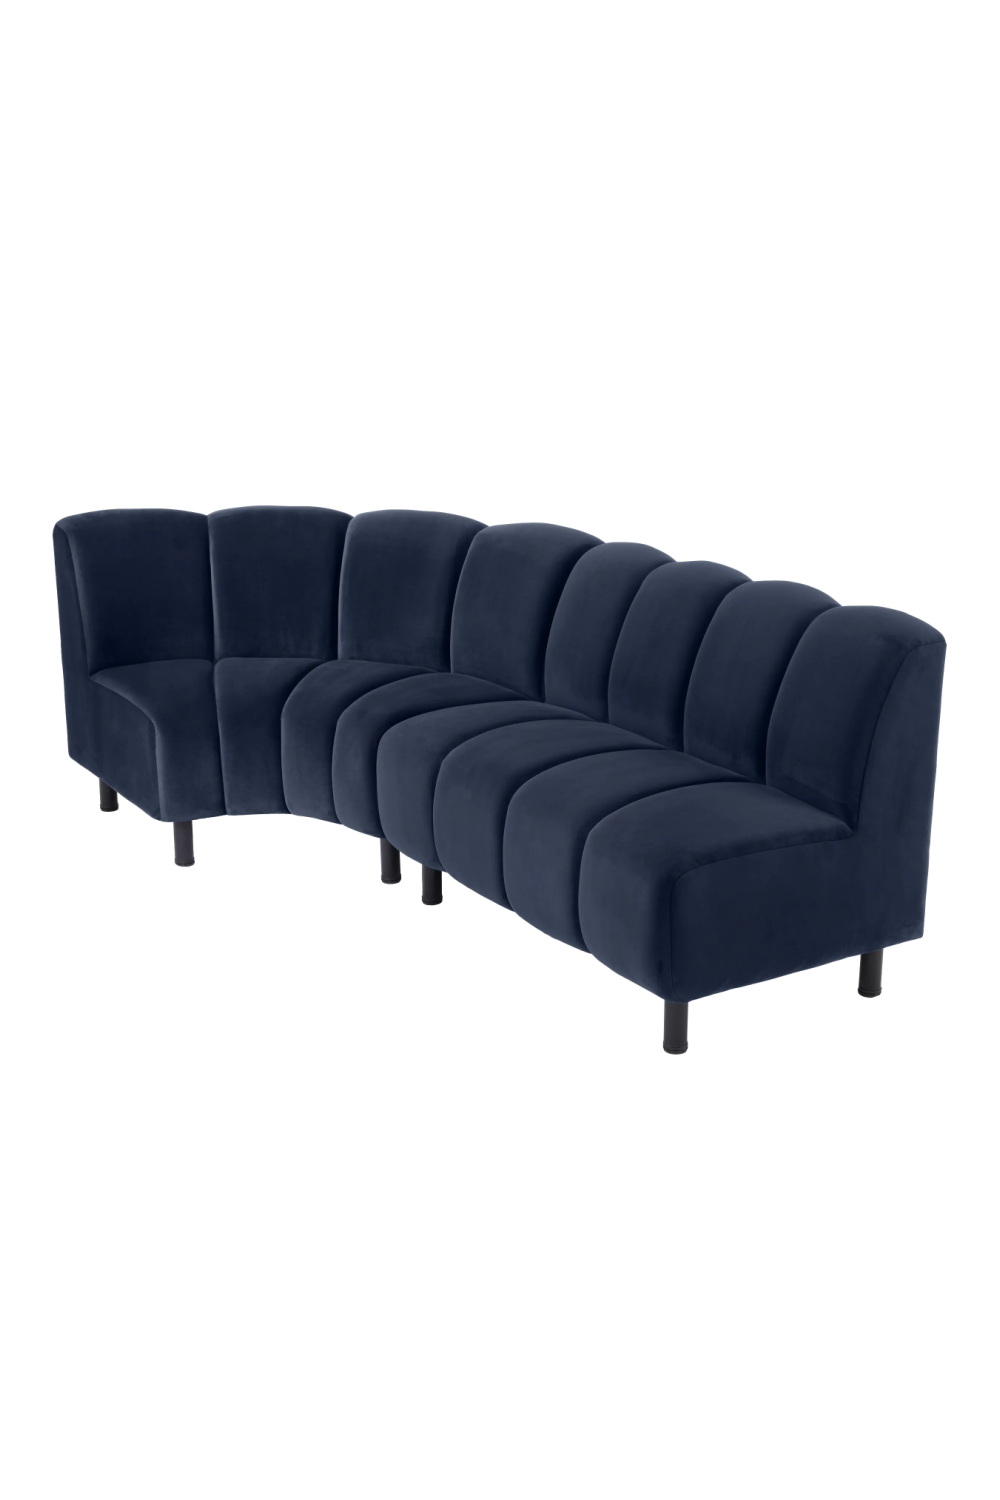 Blue Curved Modular Sofa | Eichholtz Hillman | Oroa.com